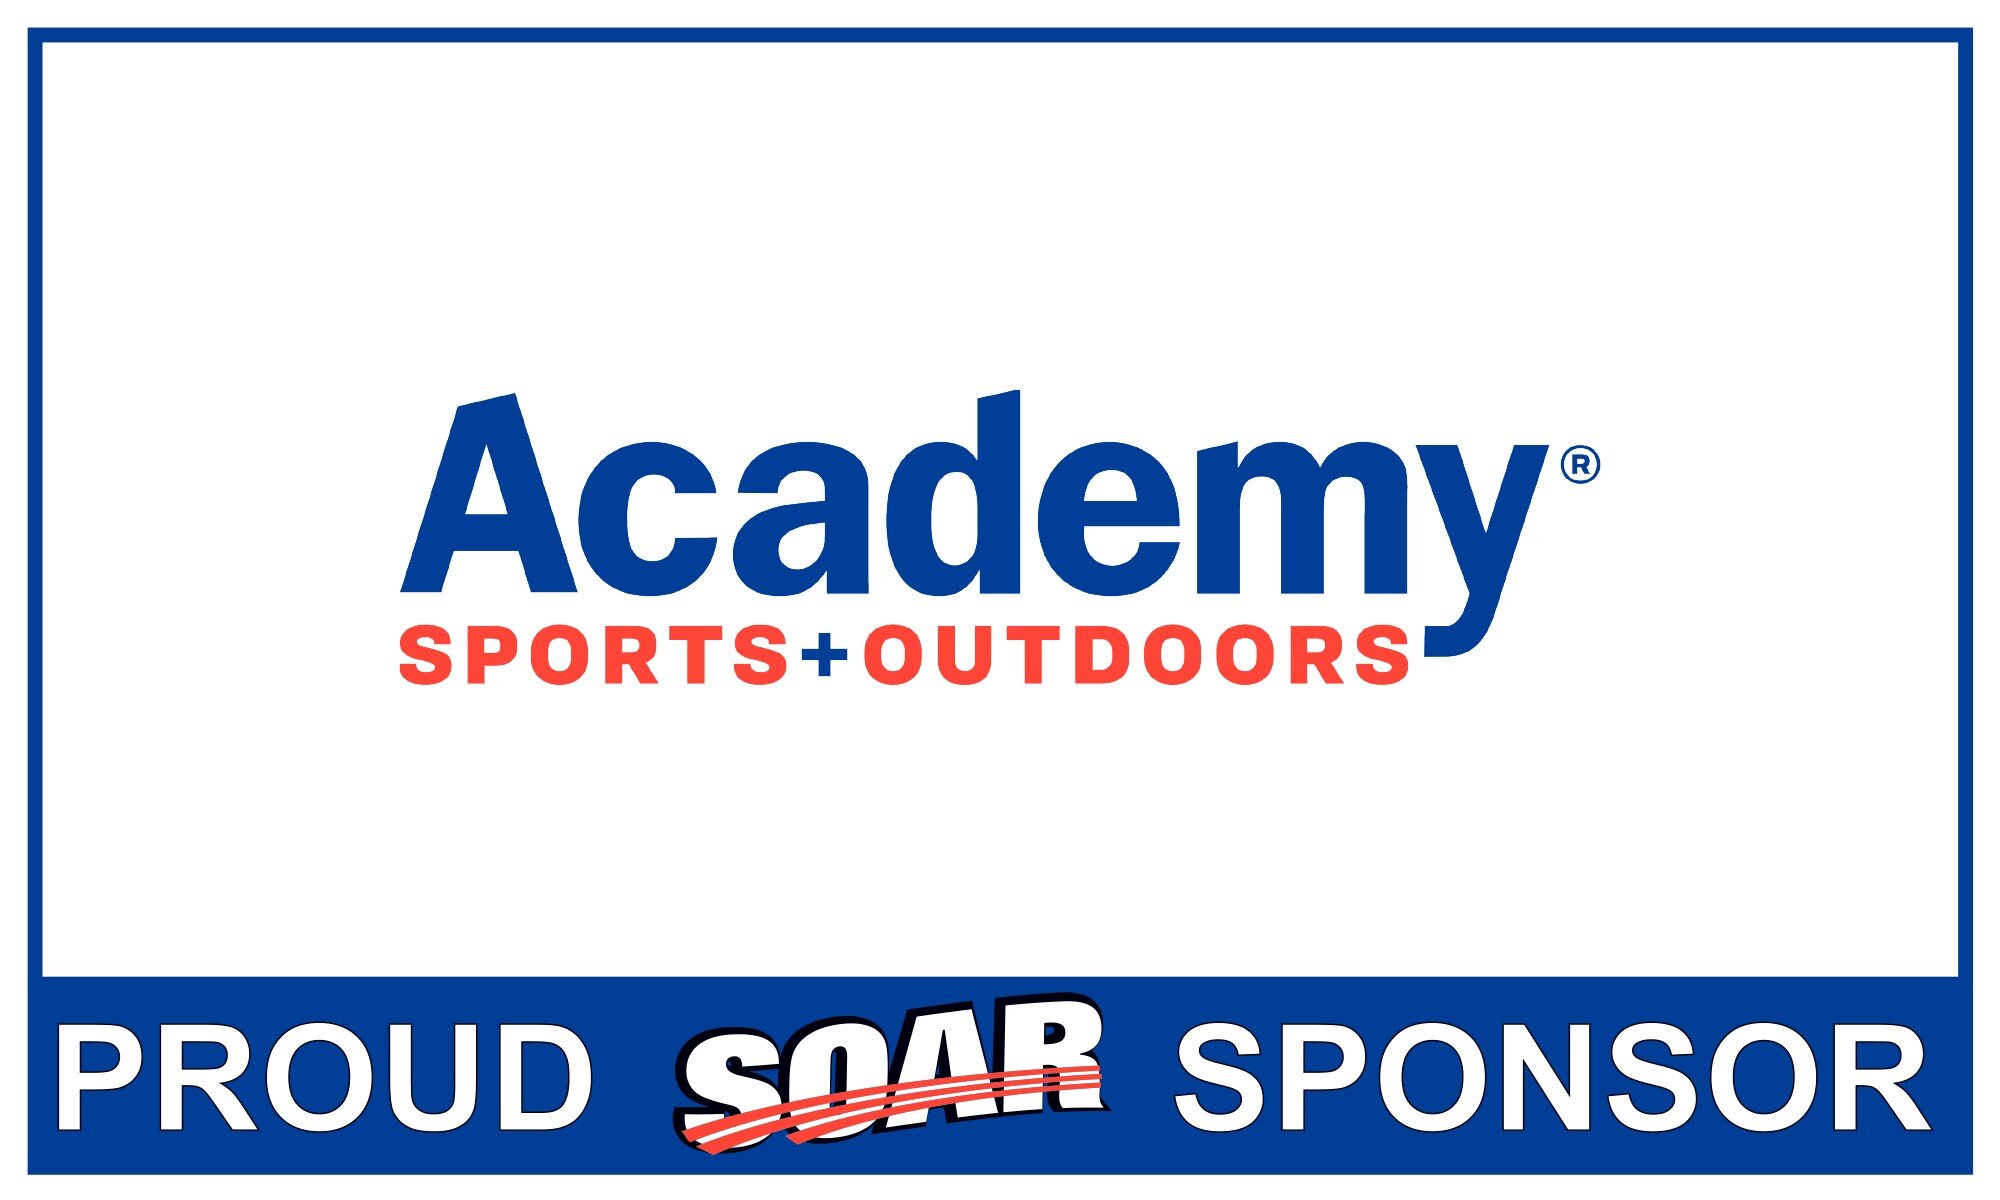 126657-1 Sponsor 3x5 banners Academy.jpg